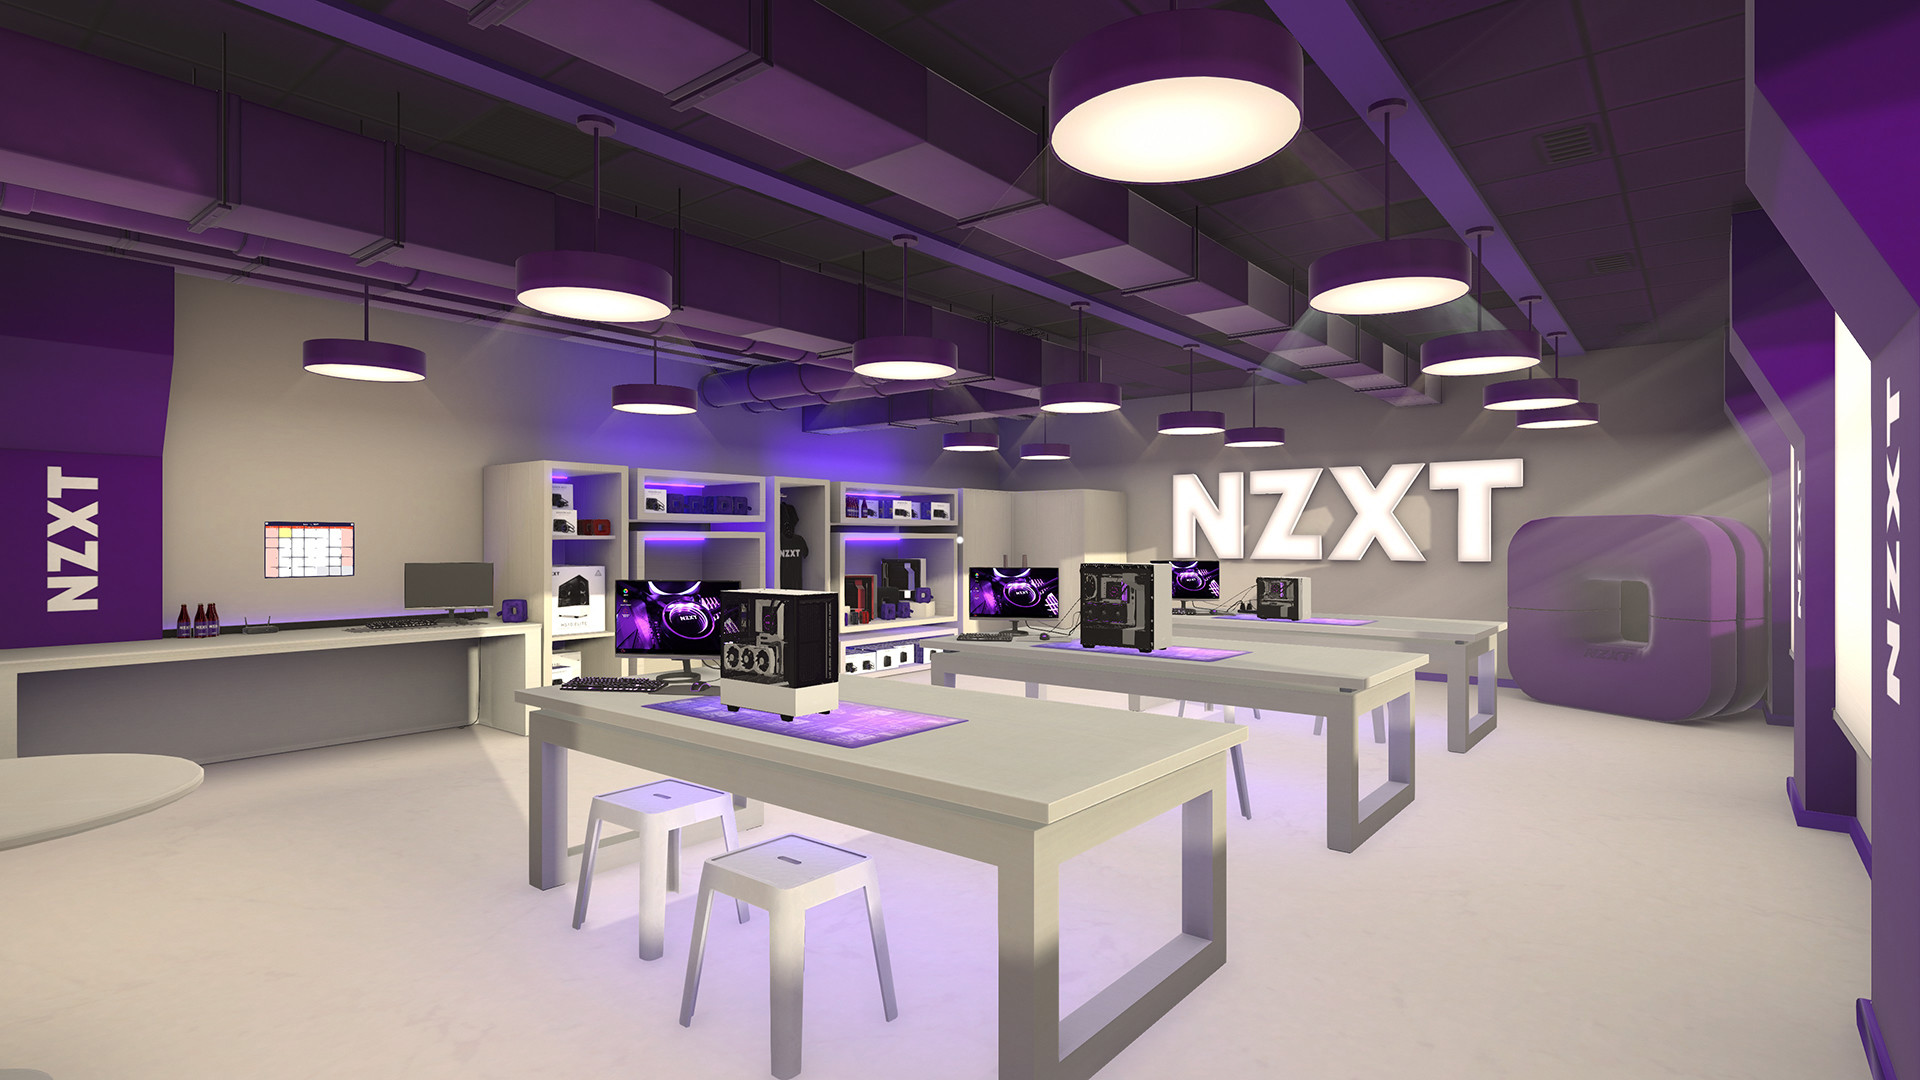 PC Building Simulator - NZXT Workshop screenshot